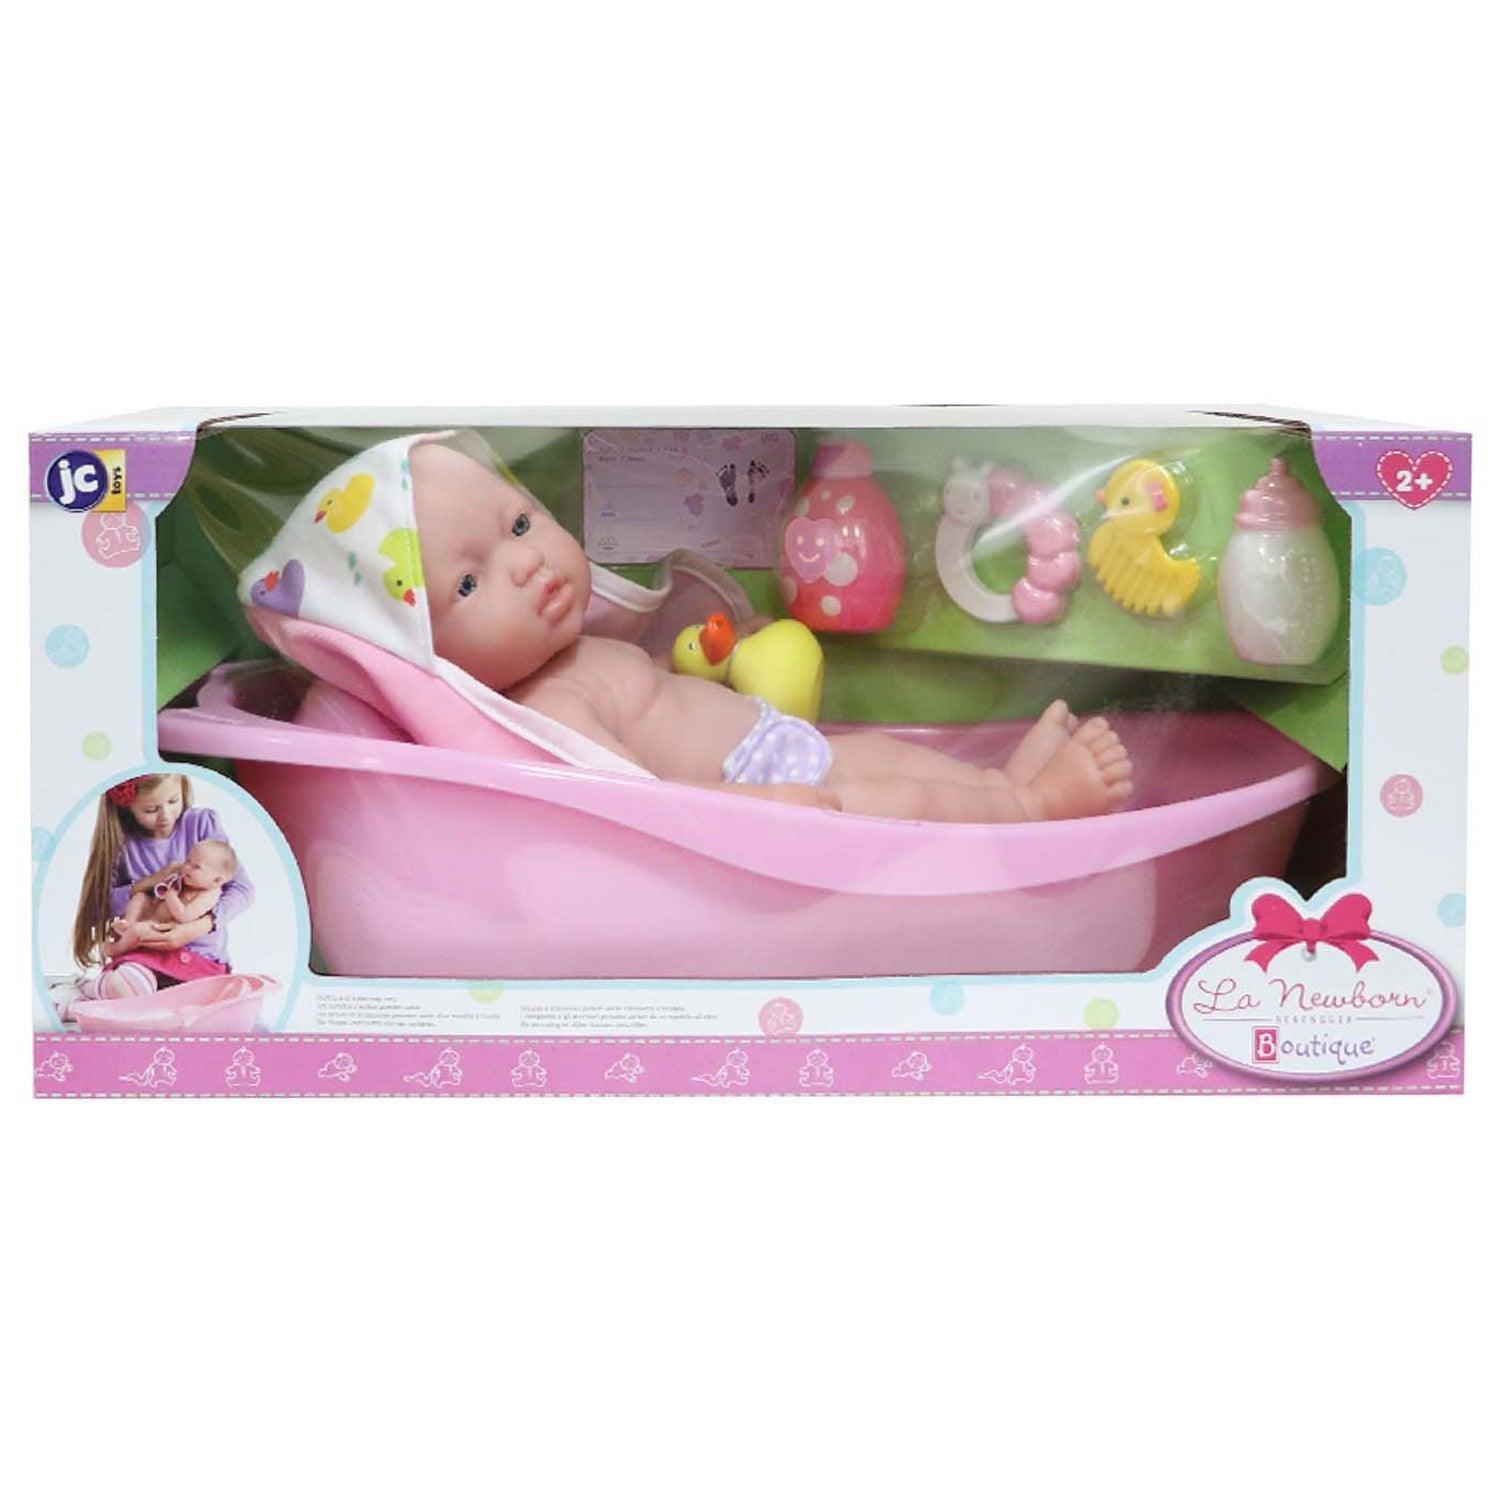 JC Toys 18332 La Newborn Baby Doll Gift, Diaper Bag Set, 13 Inches